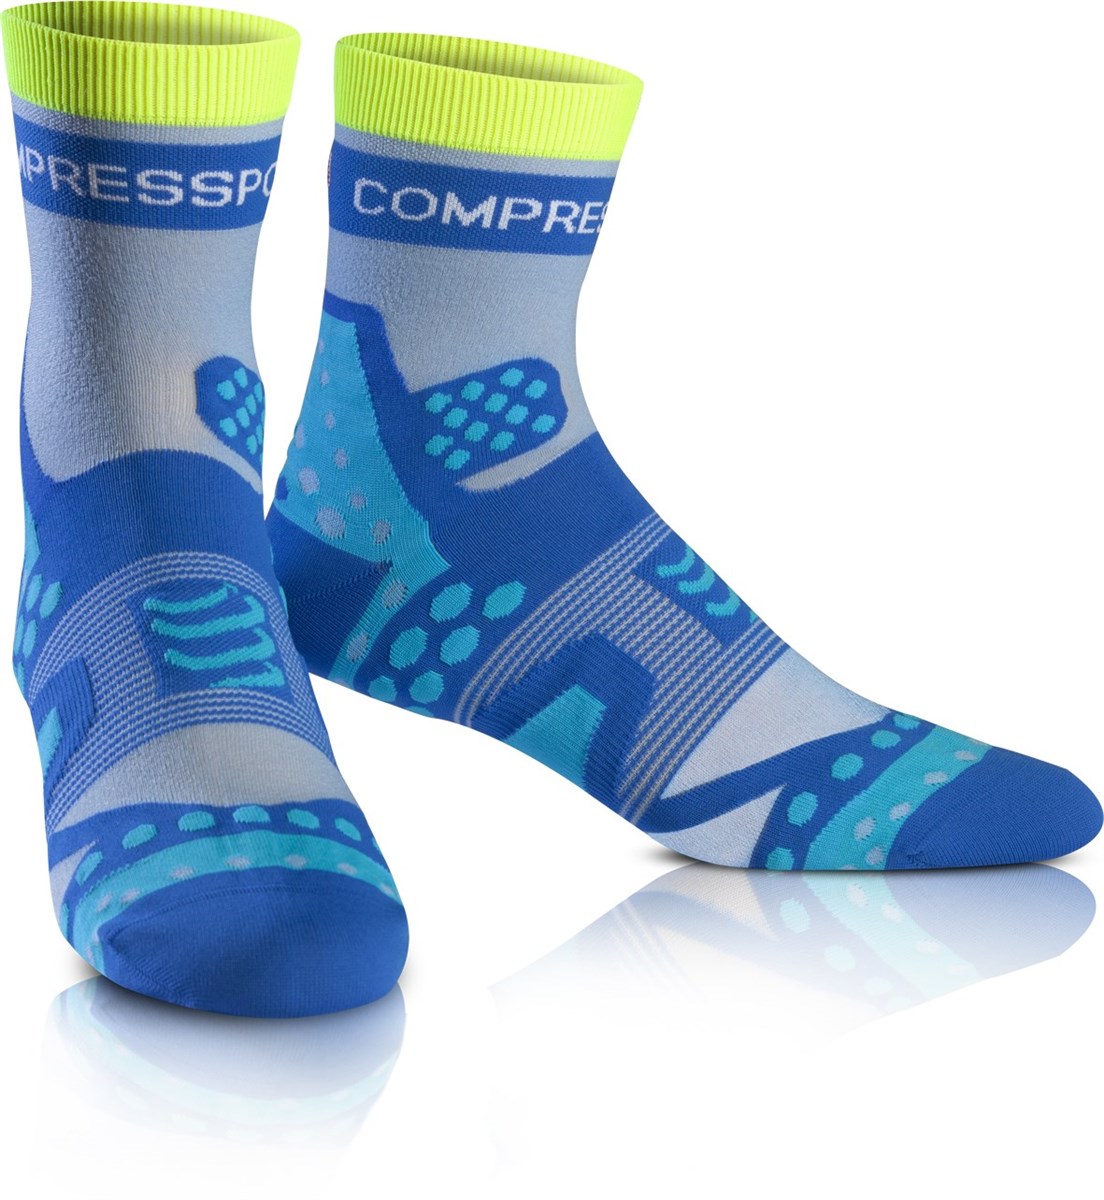 Compressport Racing socks v2.1 product image